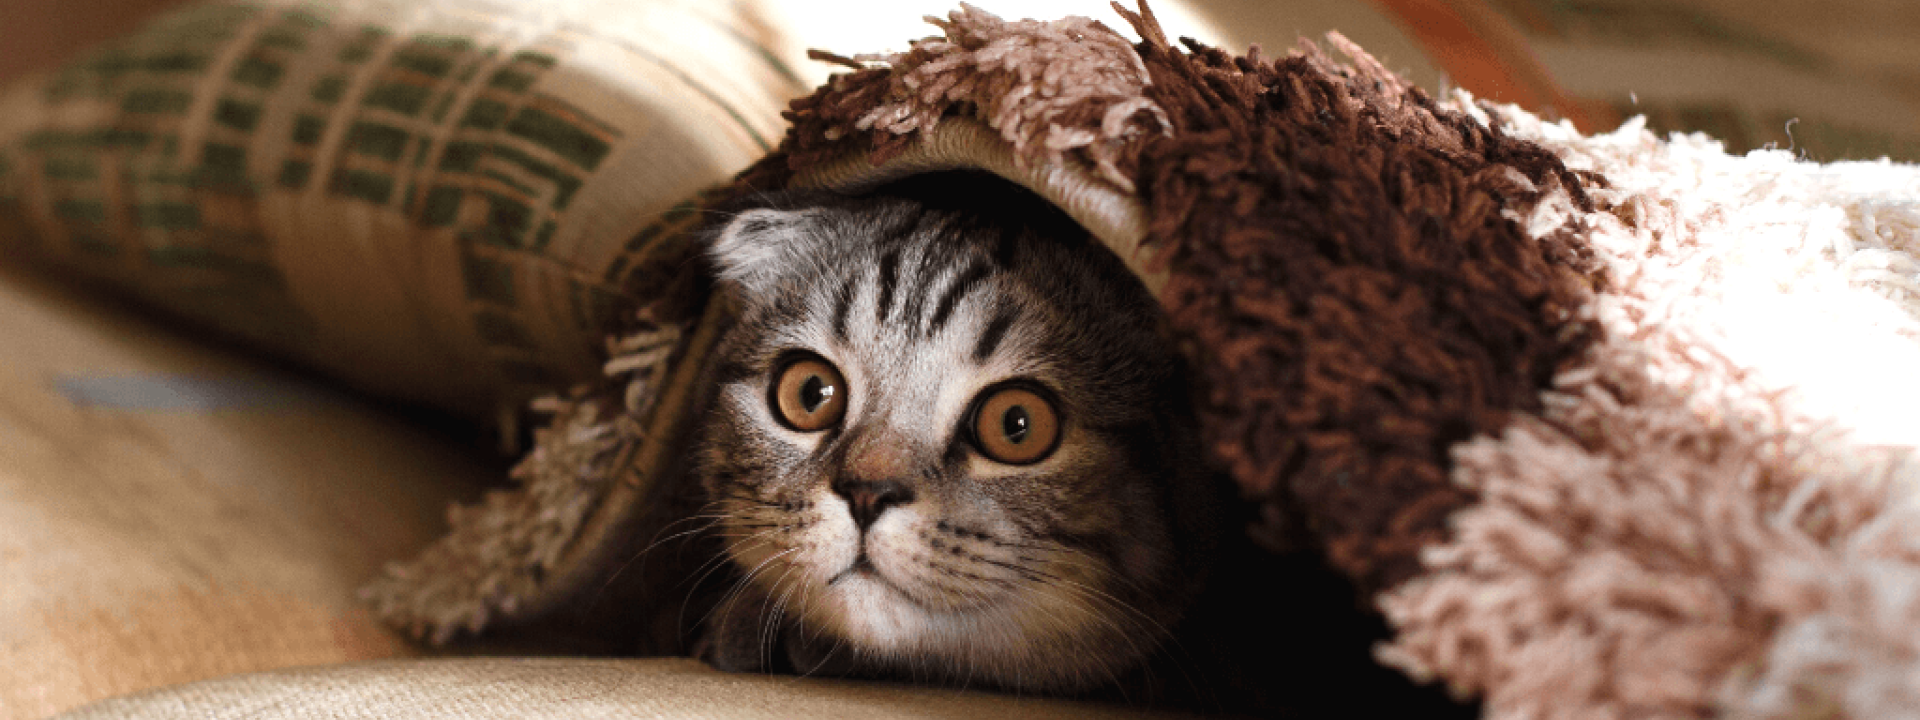 Cute cat hiding under blanket